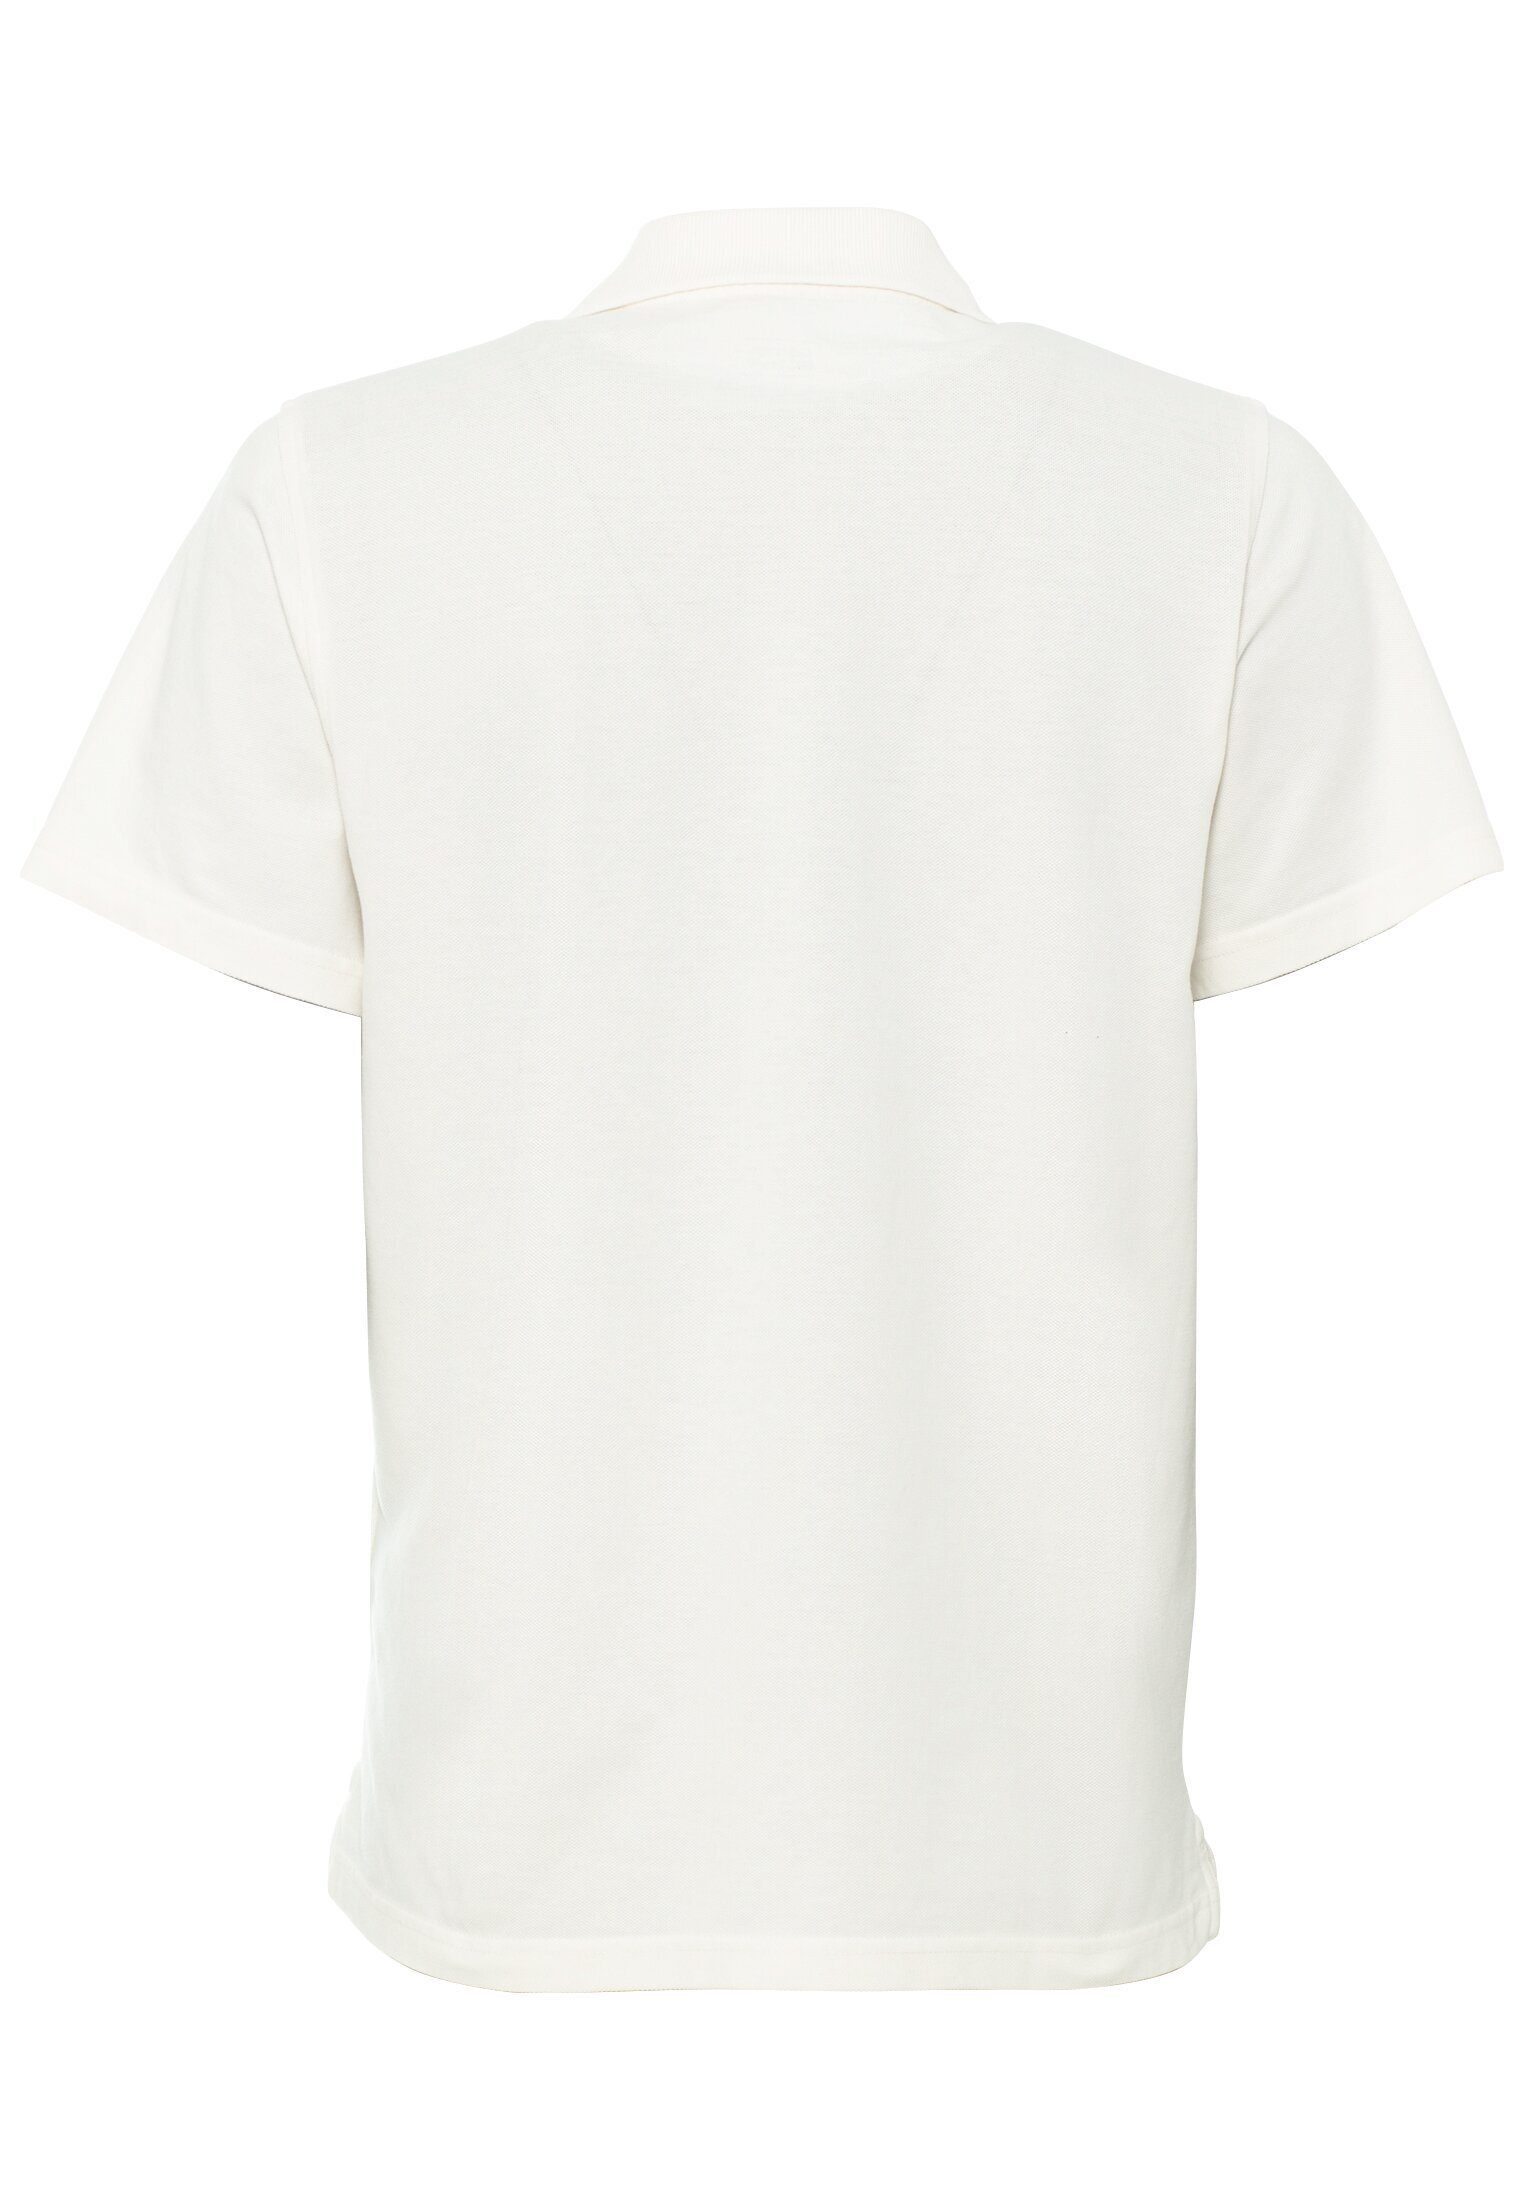 Weiß Poloshirt active Cotton Shirts_Poloshirt Organic camel aus